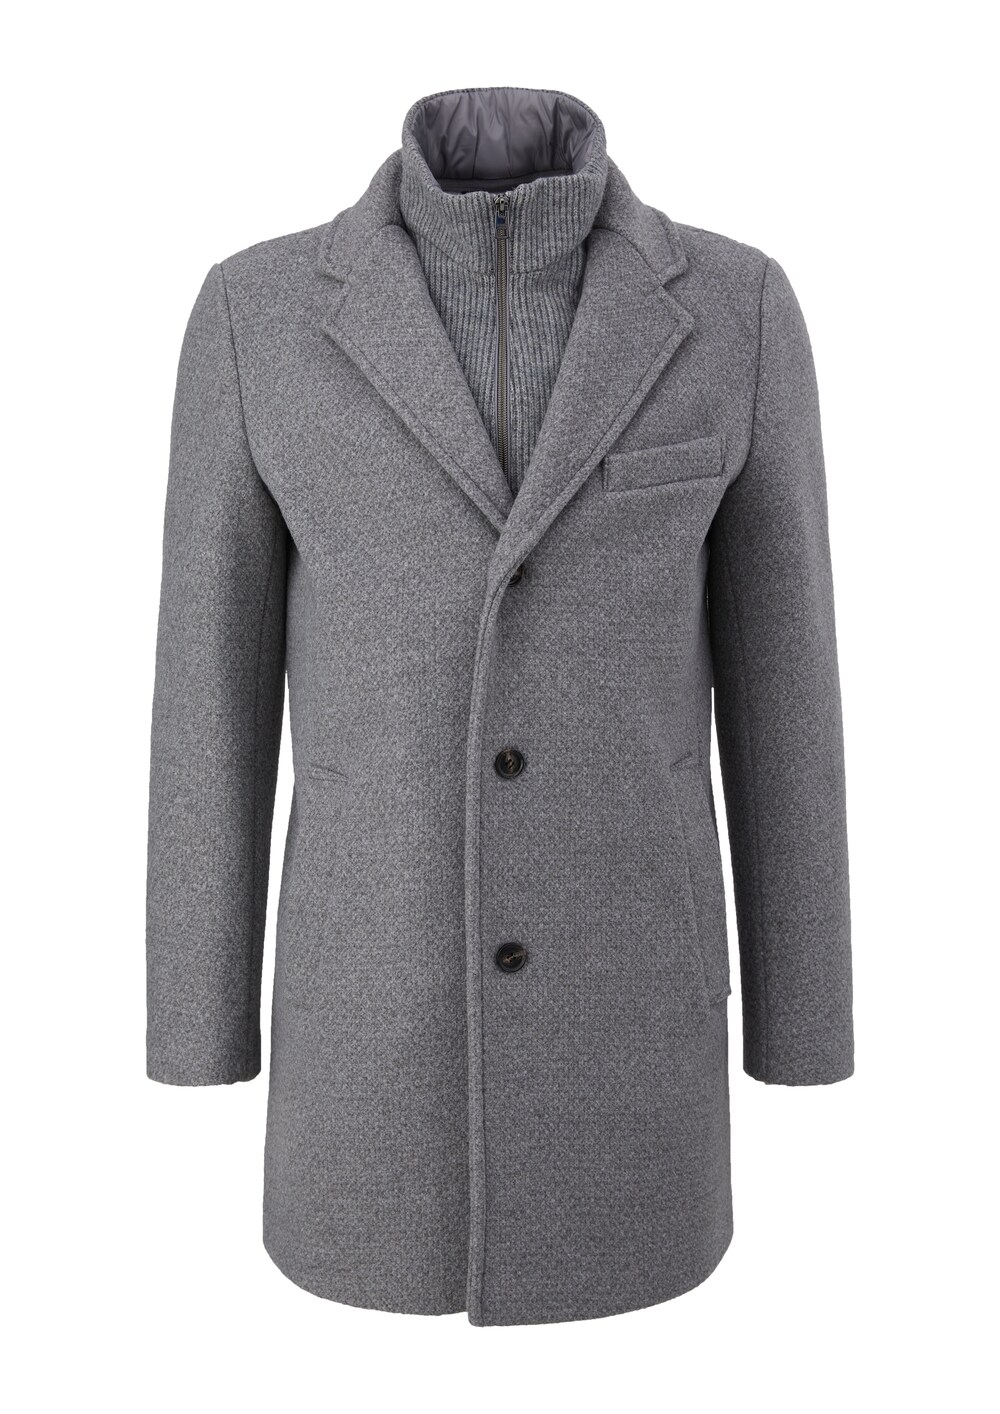 Межсезонное пальто S.Oliver, пестрый серый межсезонное пальто s oliver пестрый бежевый